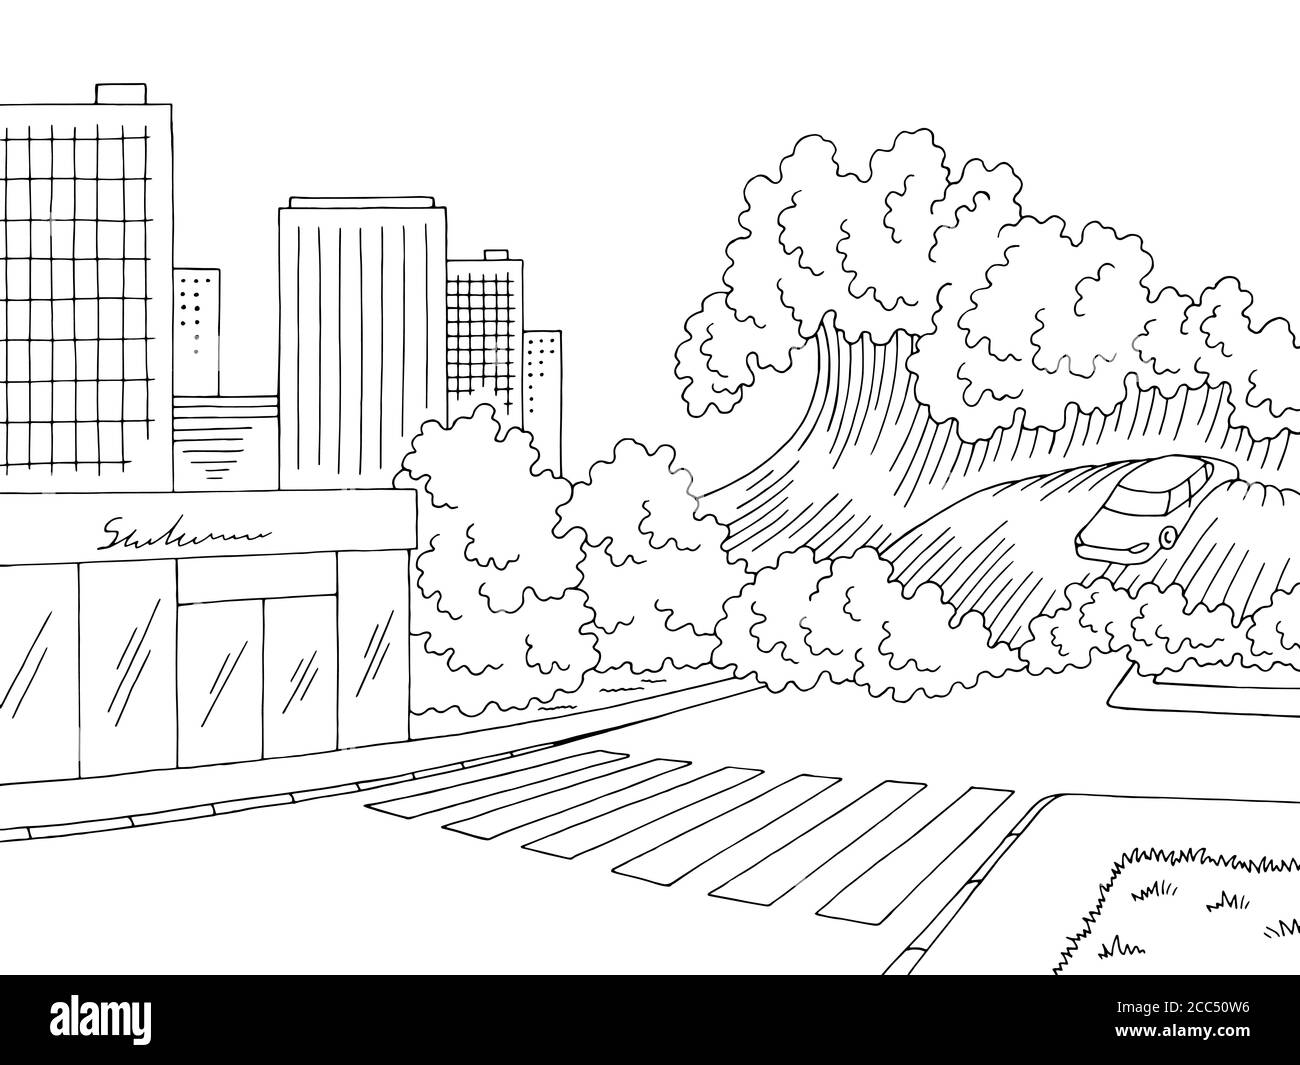 Tsunami Flutgrafik schwarz weiß Landschaft Stadt Skizze Illustration Vektor Stock Vektor